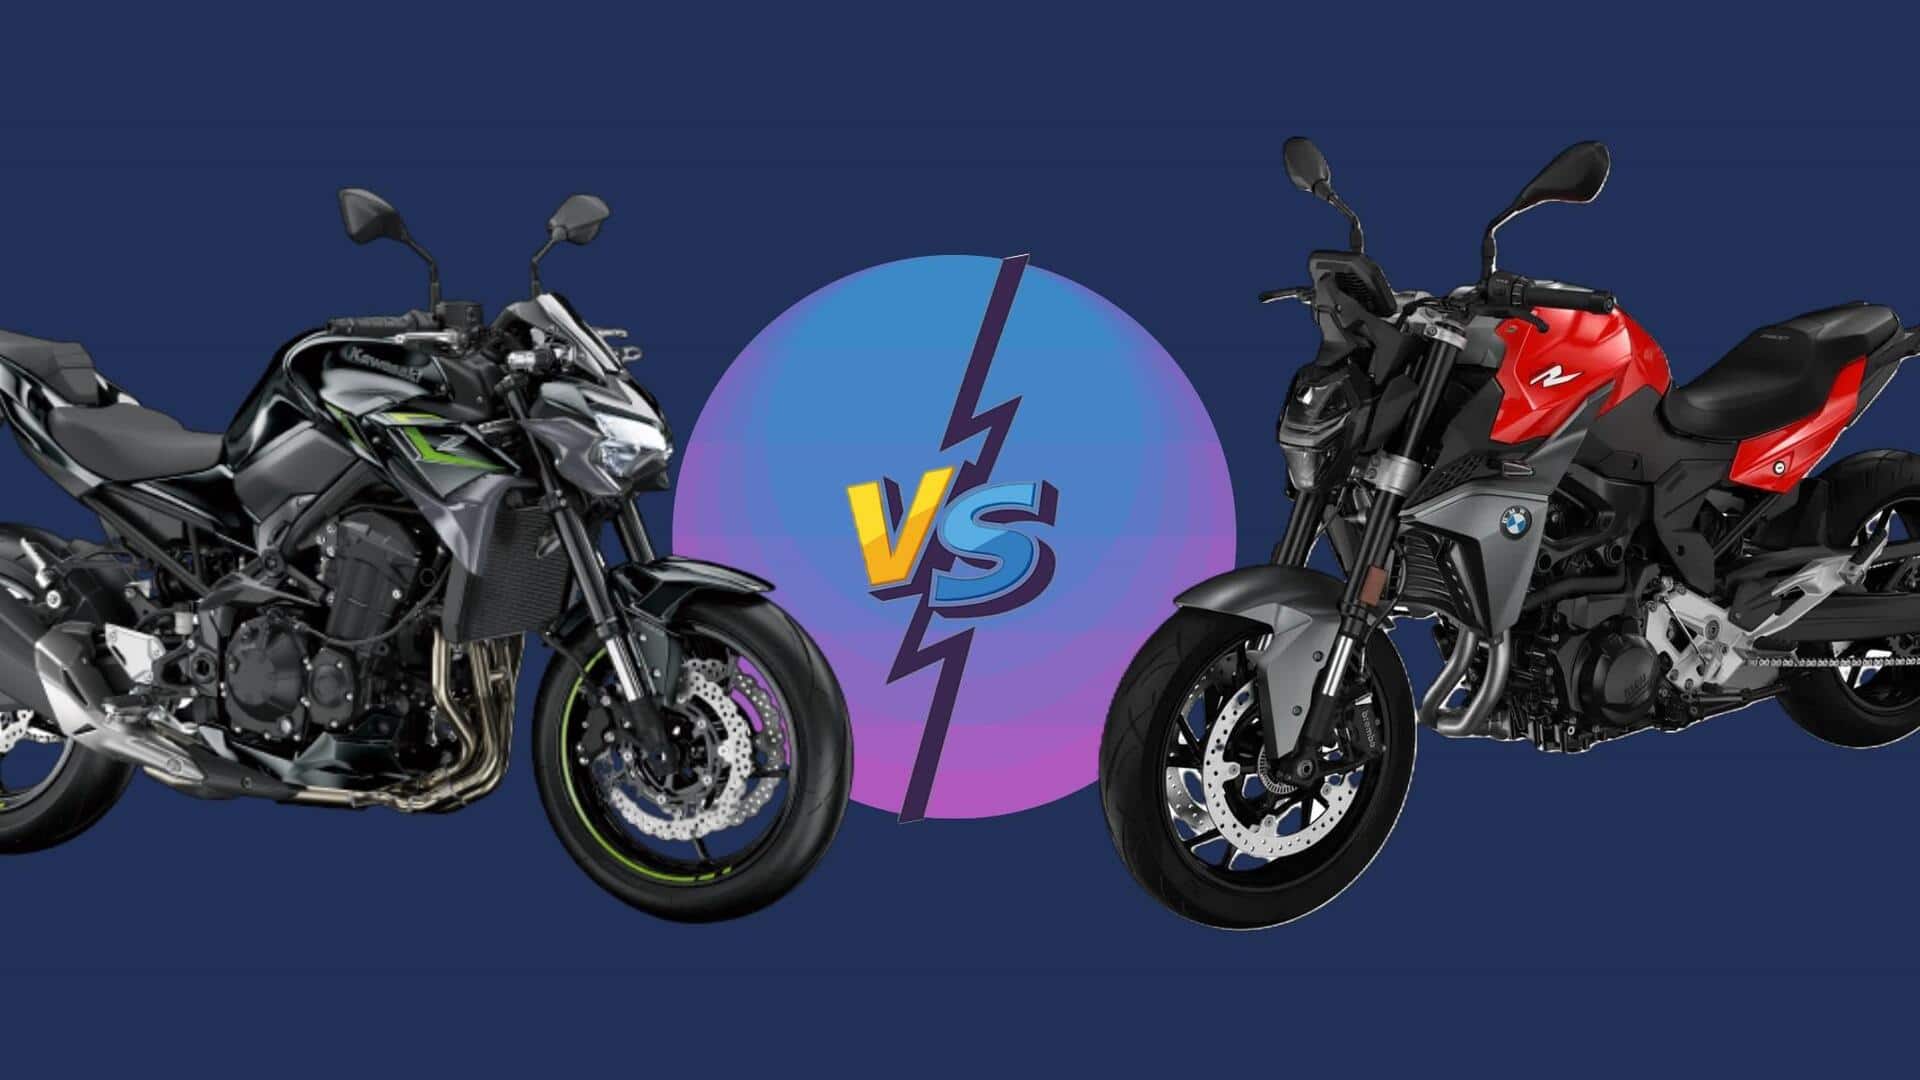 Kawasaki Z900 vs BMW F 900 R: Which is better